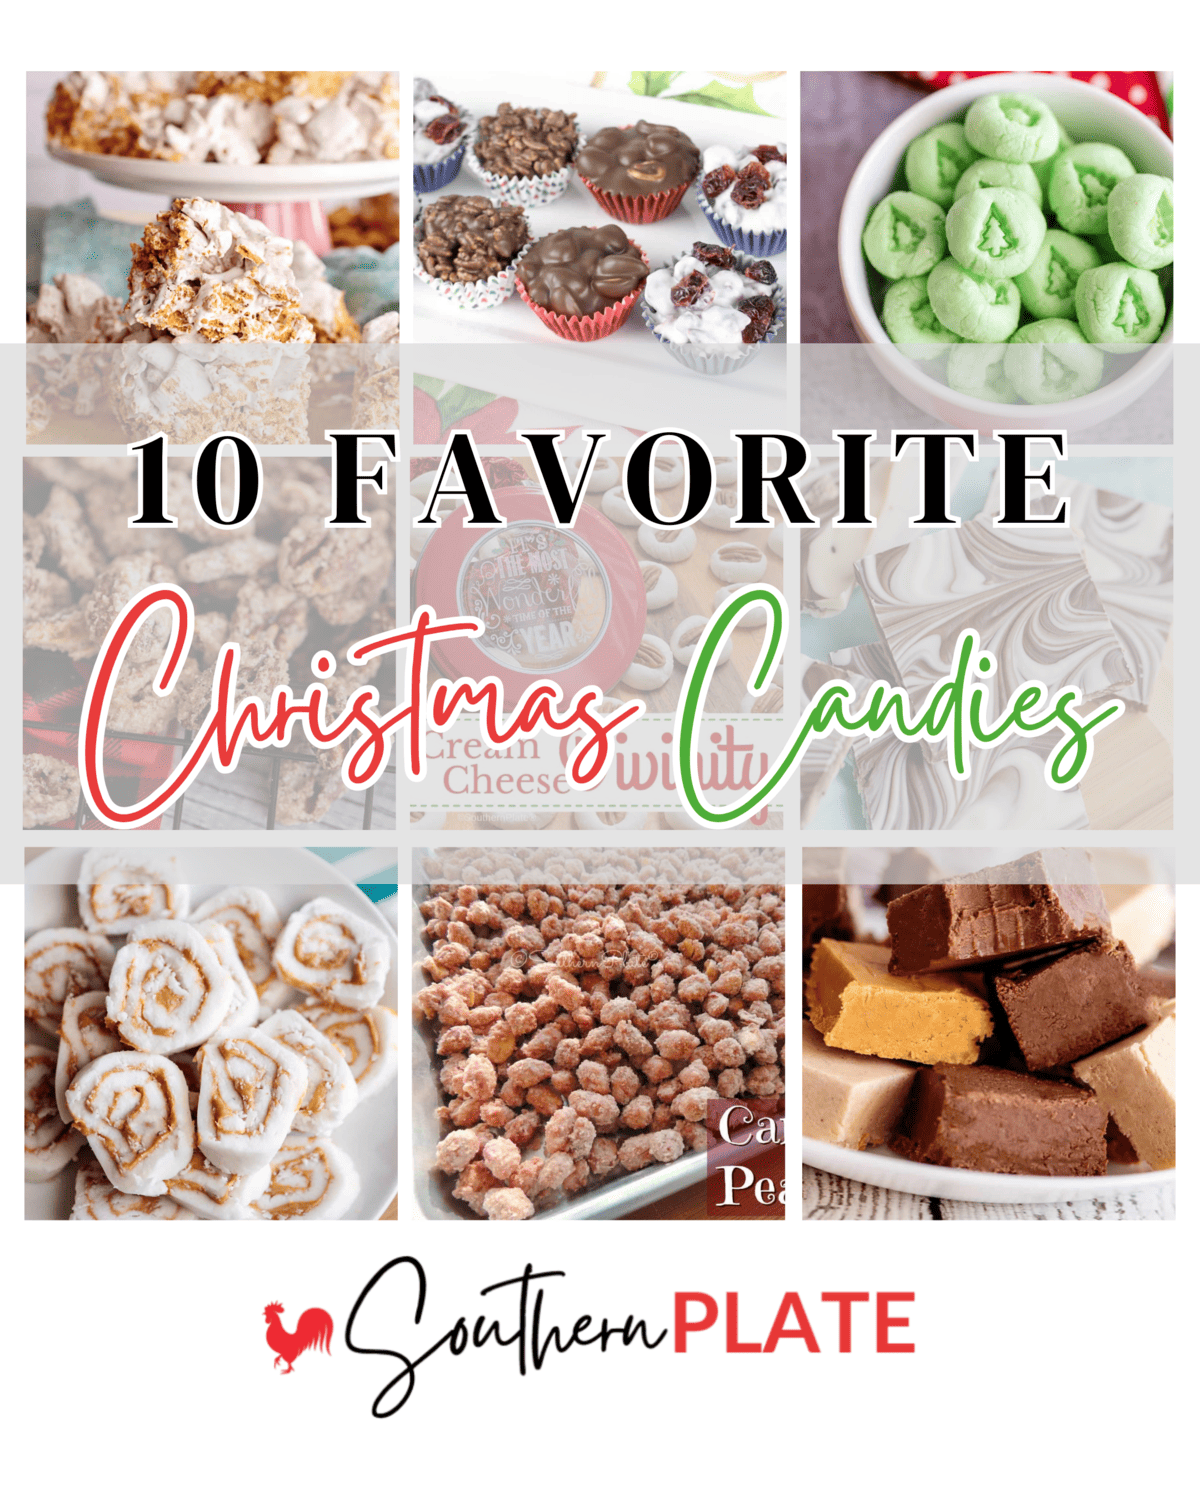 10 favorite Christmas candies